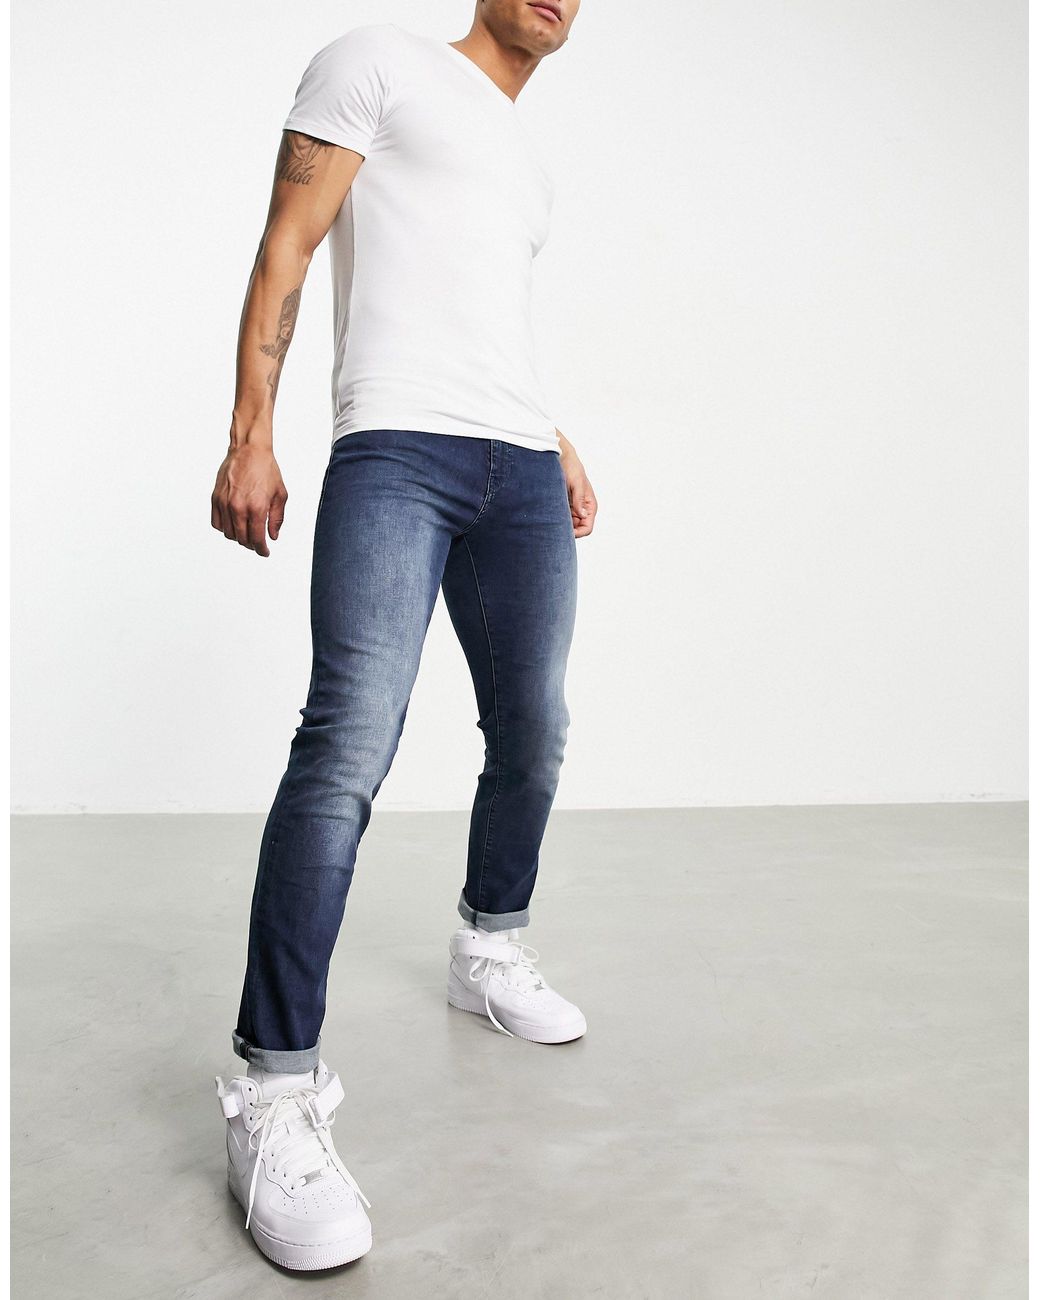 BOSS by HUGO BOSS Charleston - Skinny Fit Jeans in het Blauw voor heren |  Lyst NL